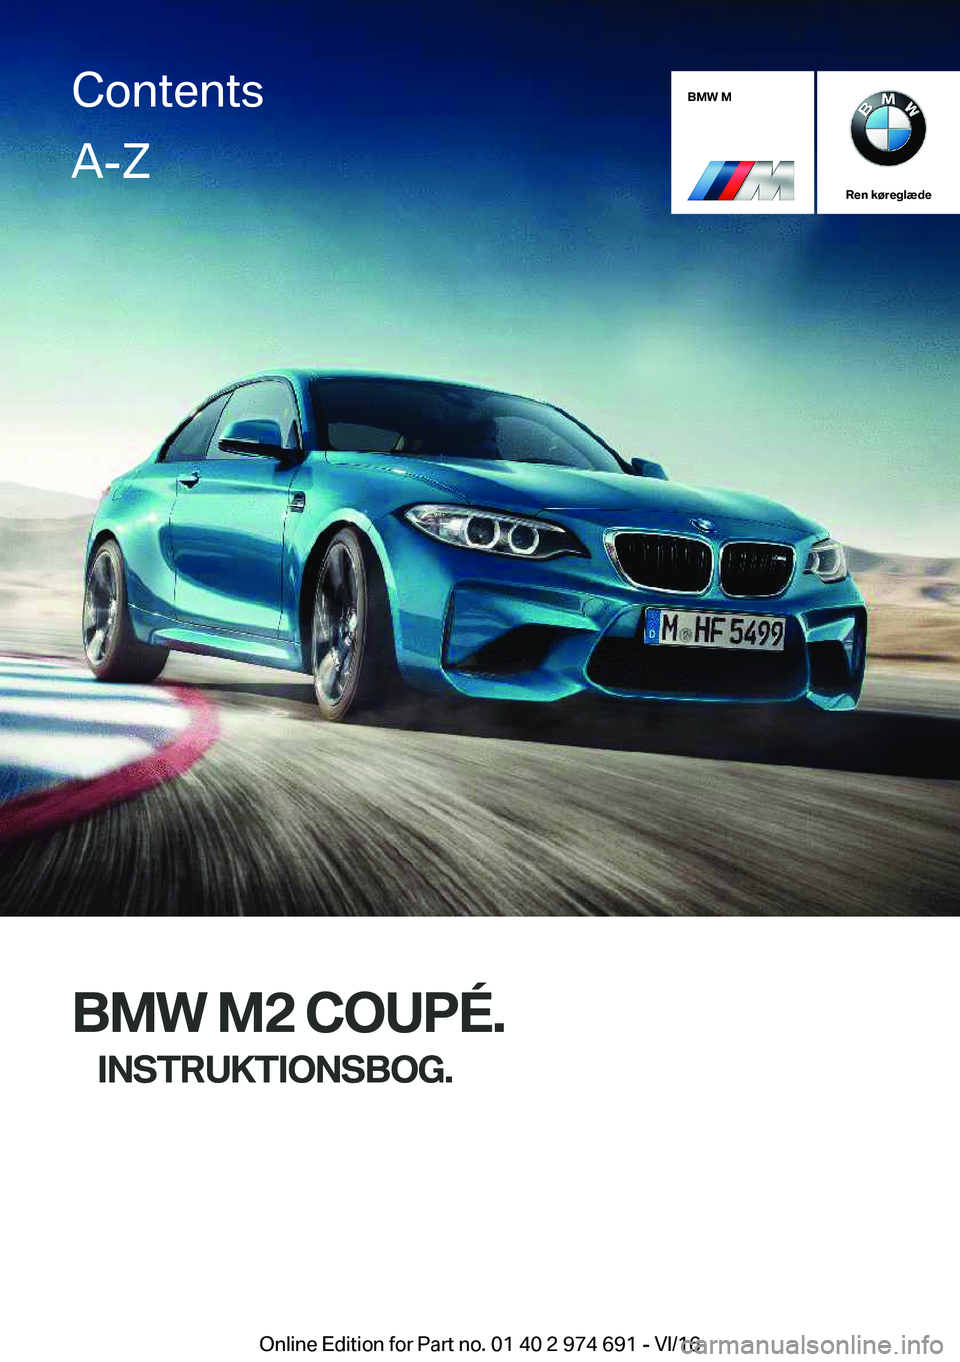 BMW M2 2017  InstruktionsbØger (in Danish) �B�M�W��M
�R�e�n��k�